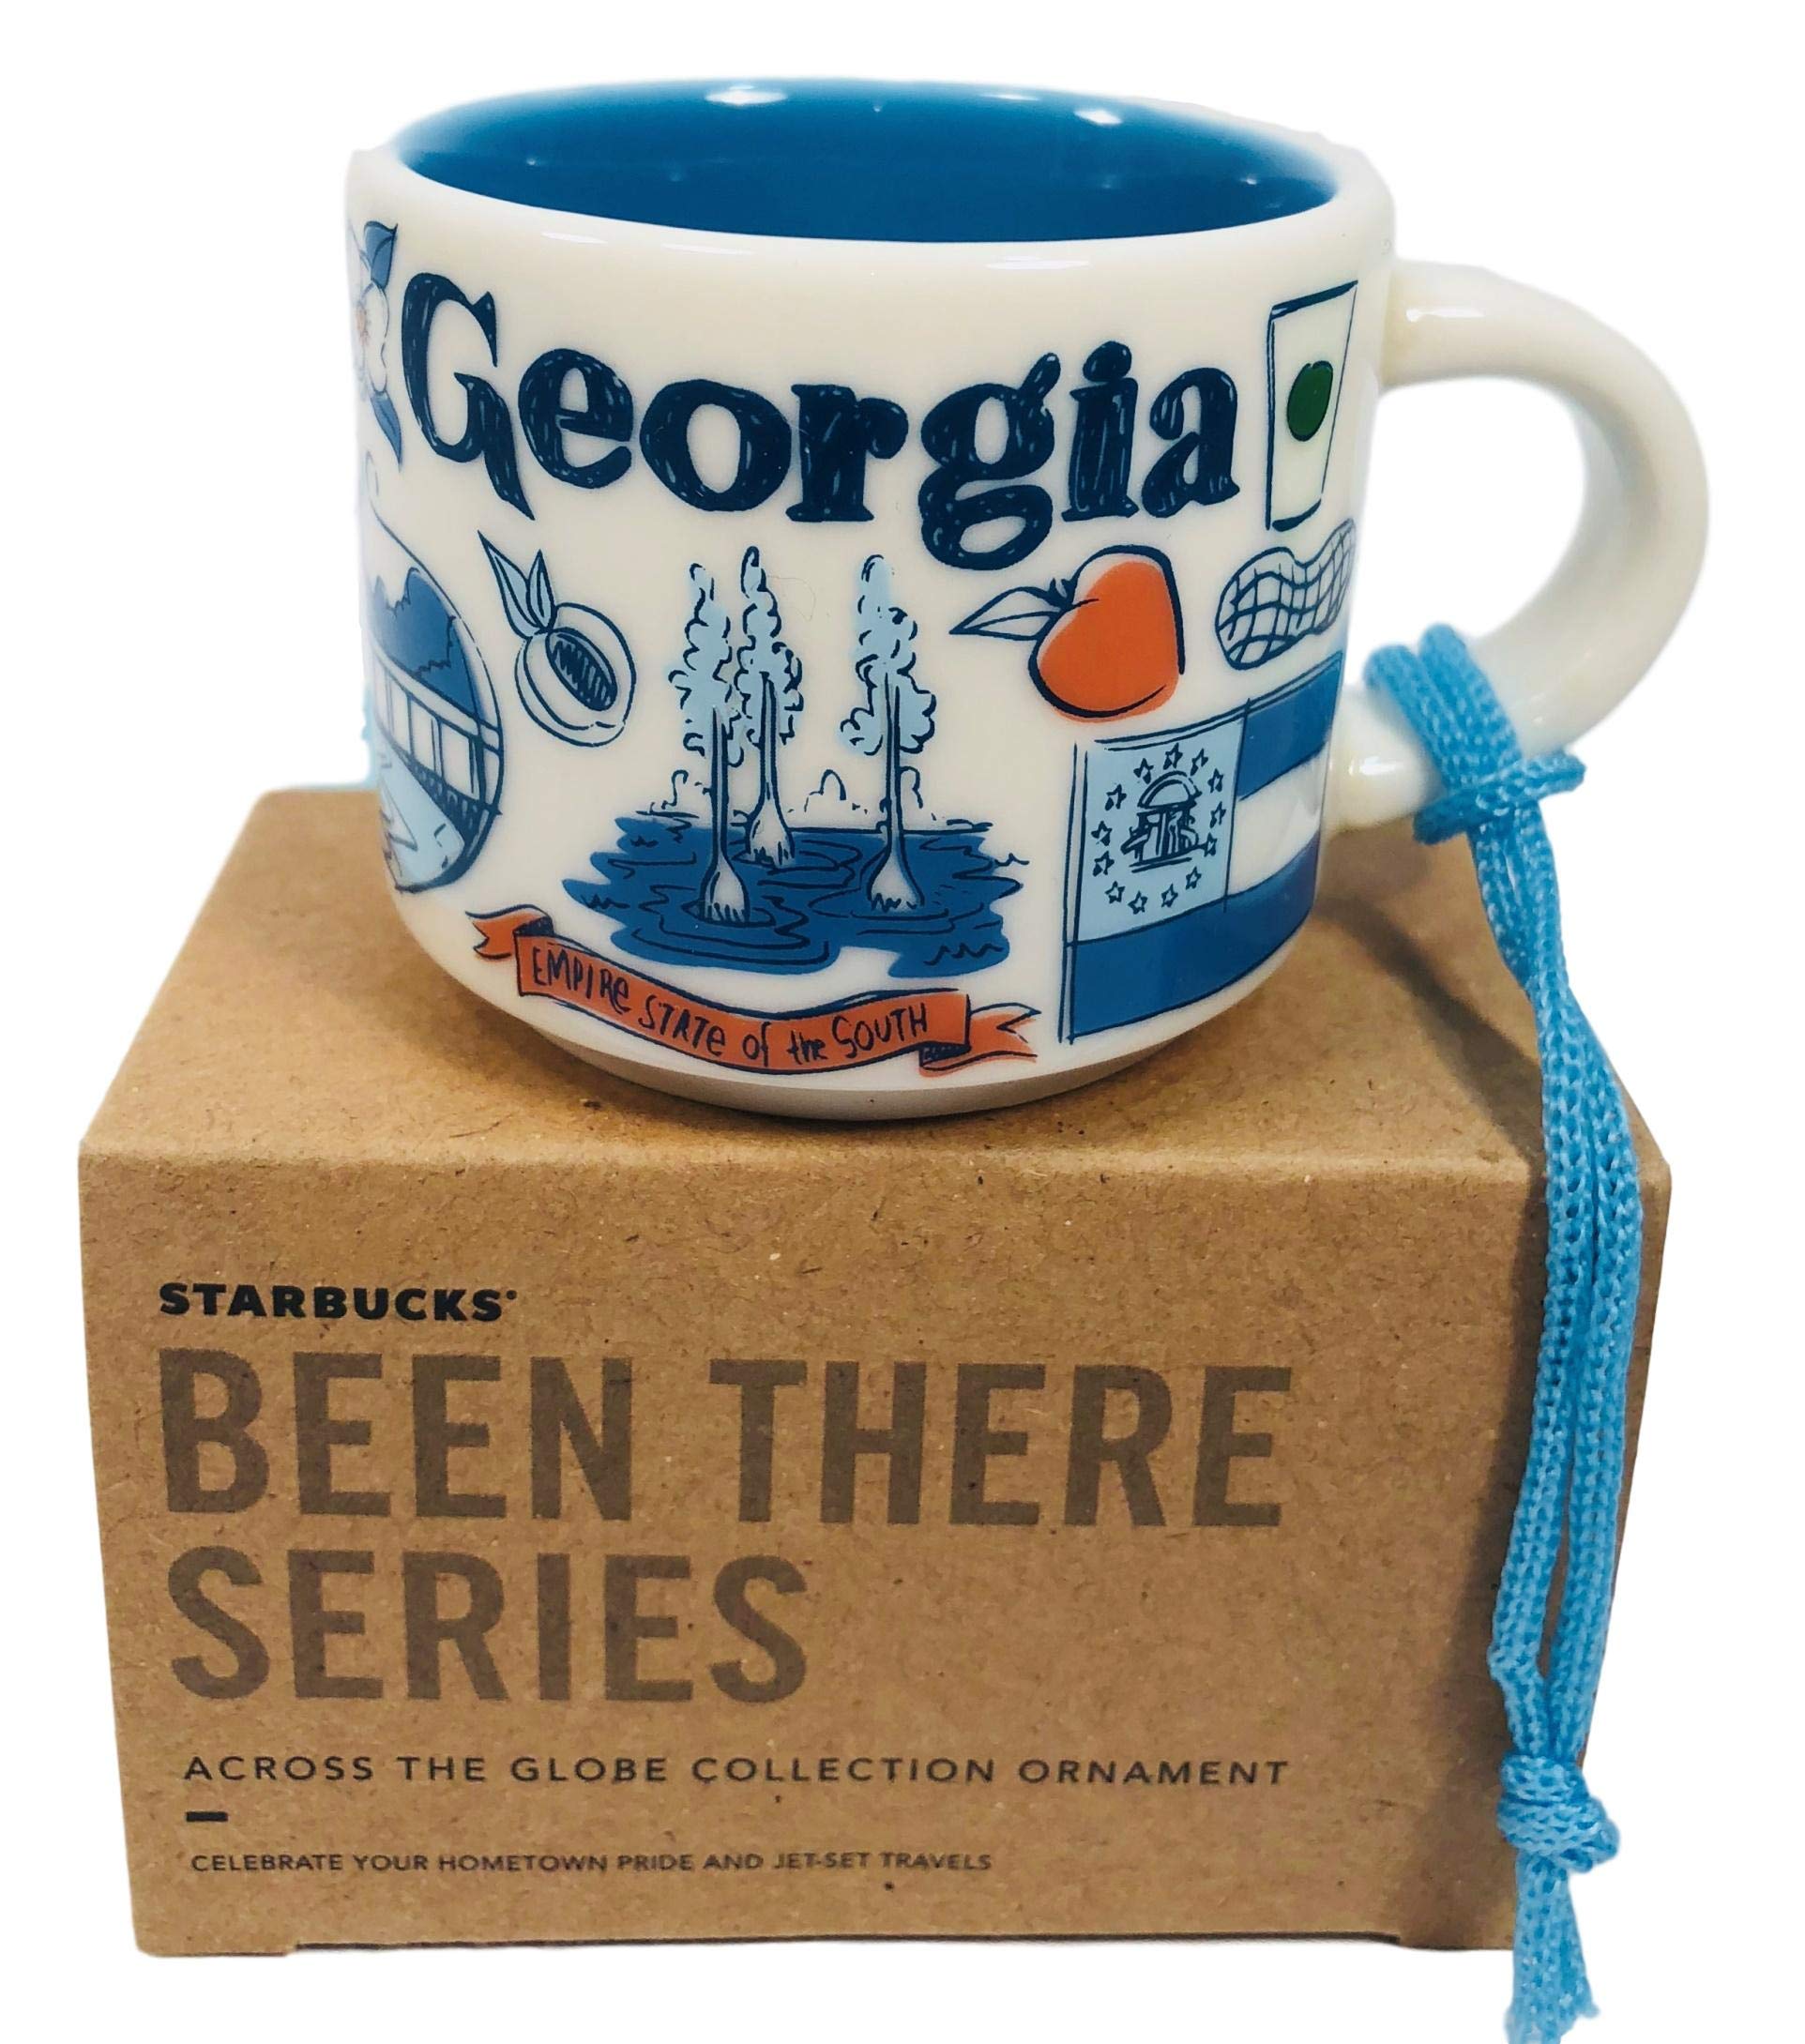 Starbucks georgia Been There Series ceramic coffee Mug Ornament 2 oz